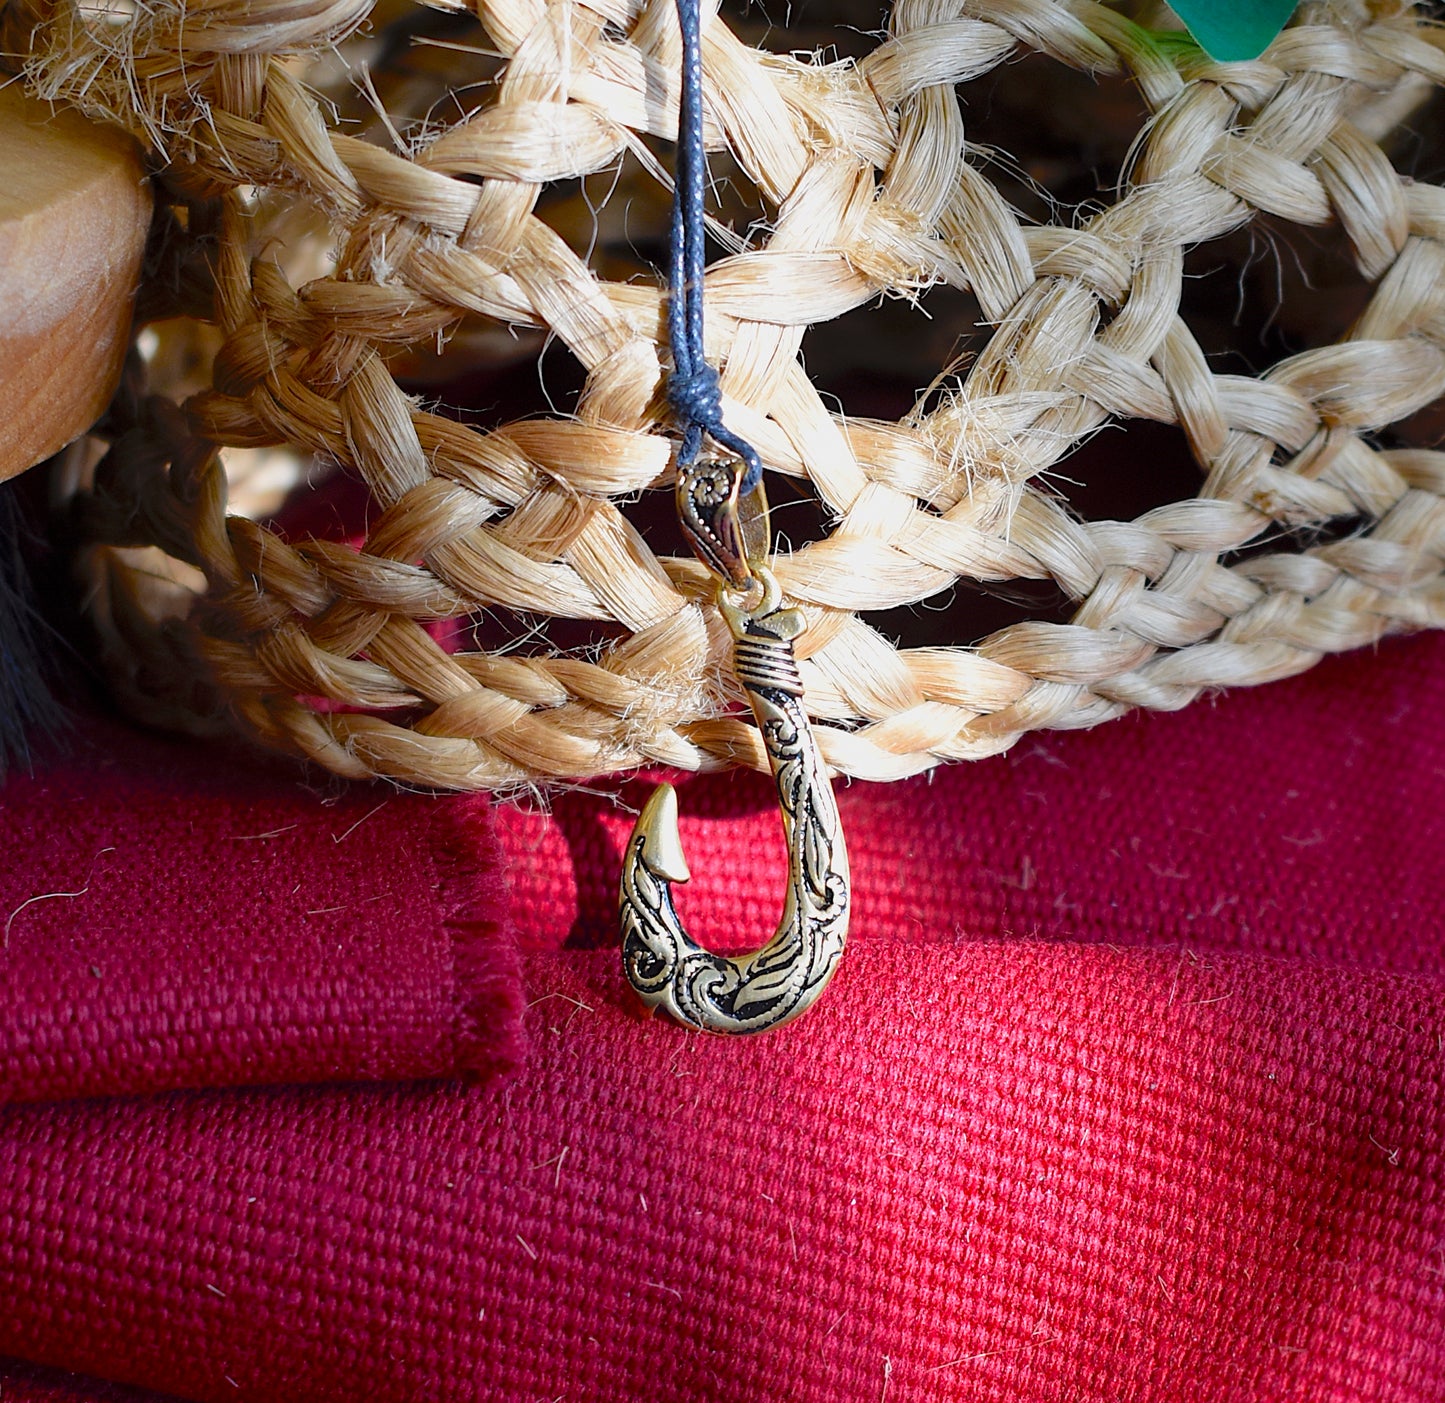 Maori Fishing Hook 92.5 Sterling Silver Pewter Brass Necklace Pendant Jewelry